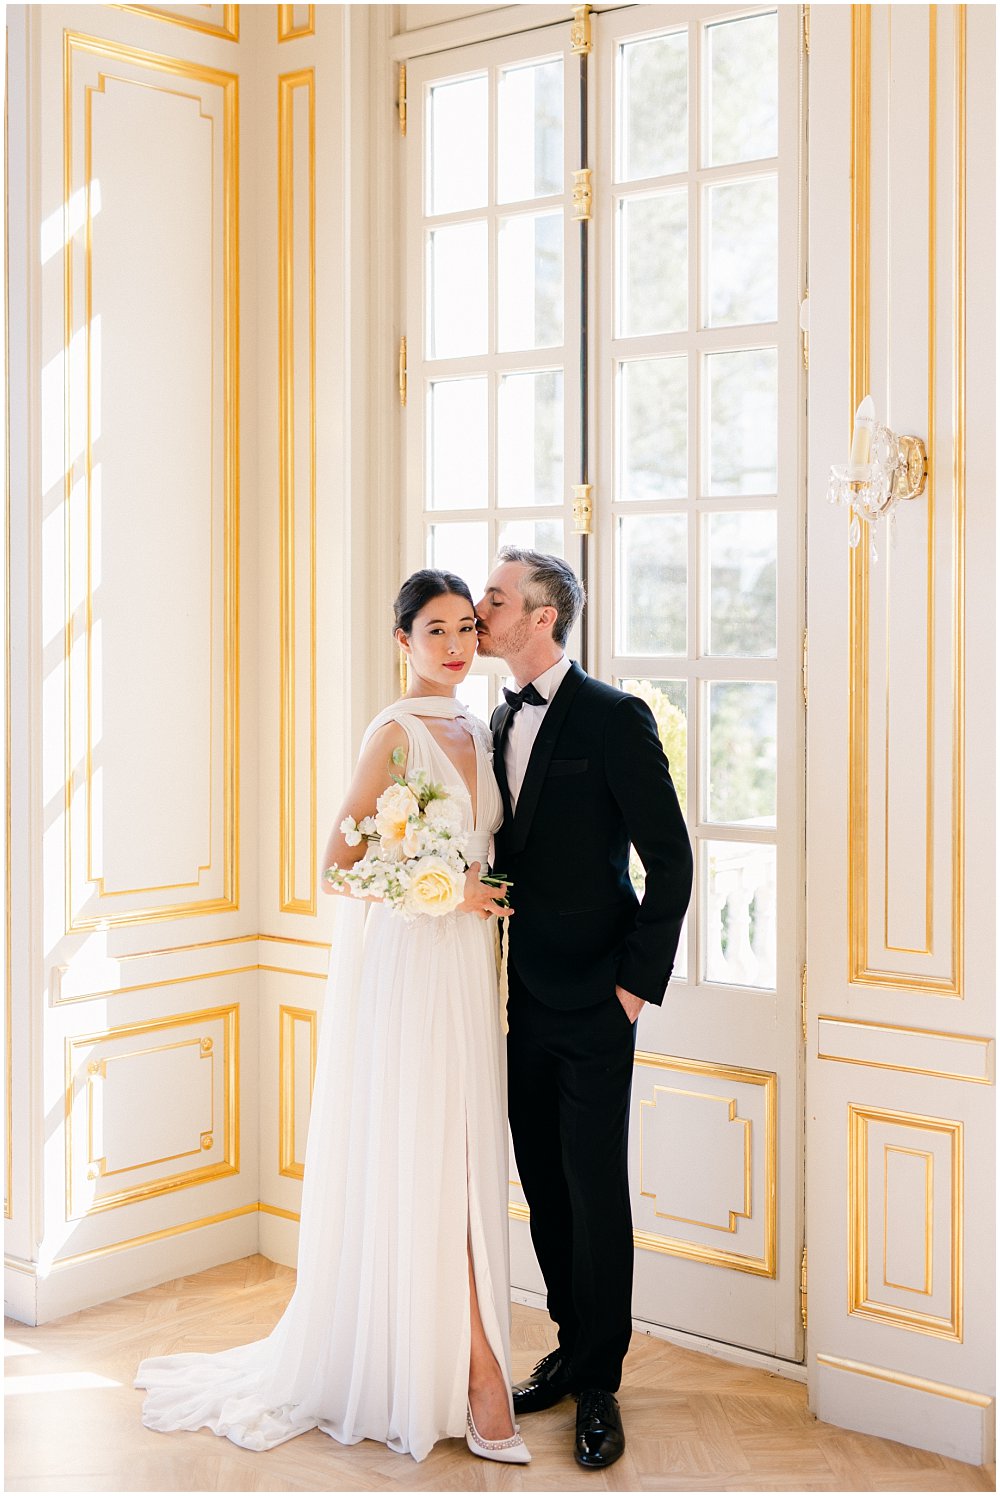 Photographe de mariage en Provence